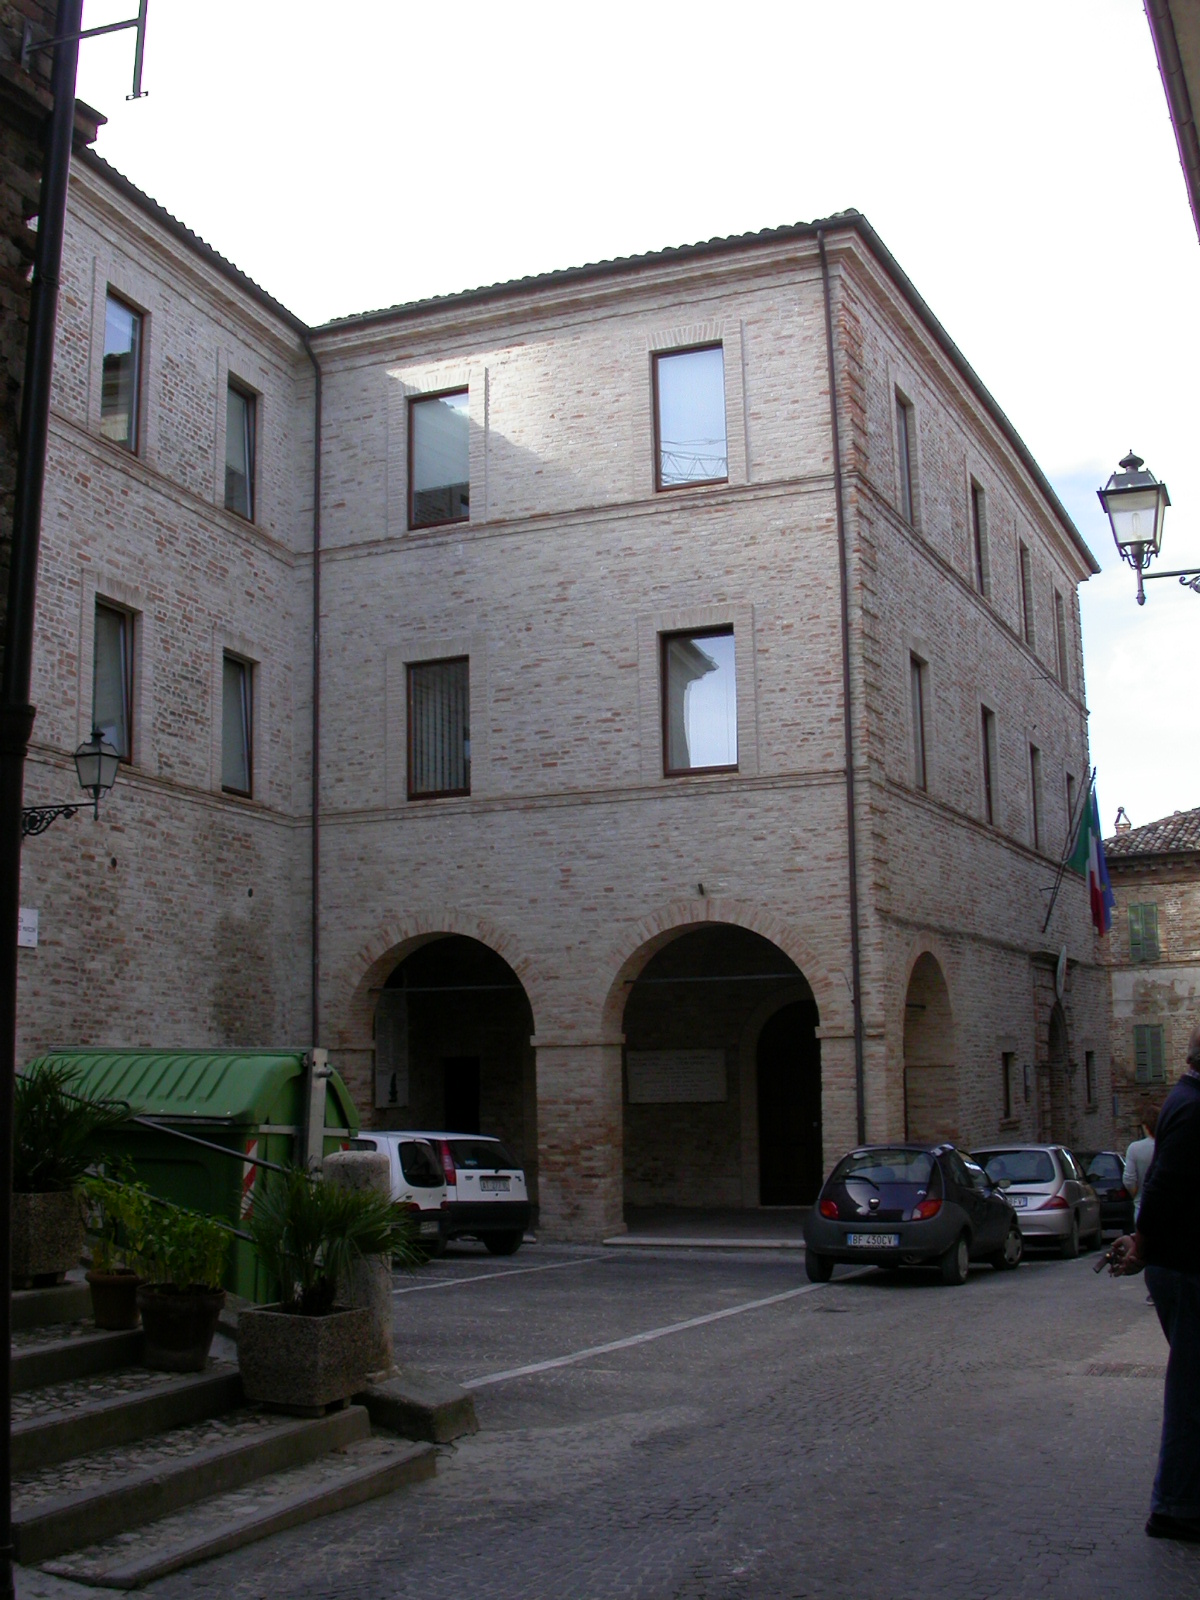 Convento delle Clarisse (convento, delle clarisse) - Castignano (AP) 